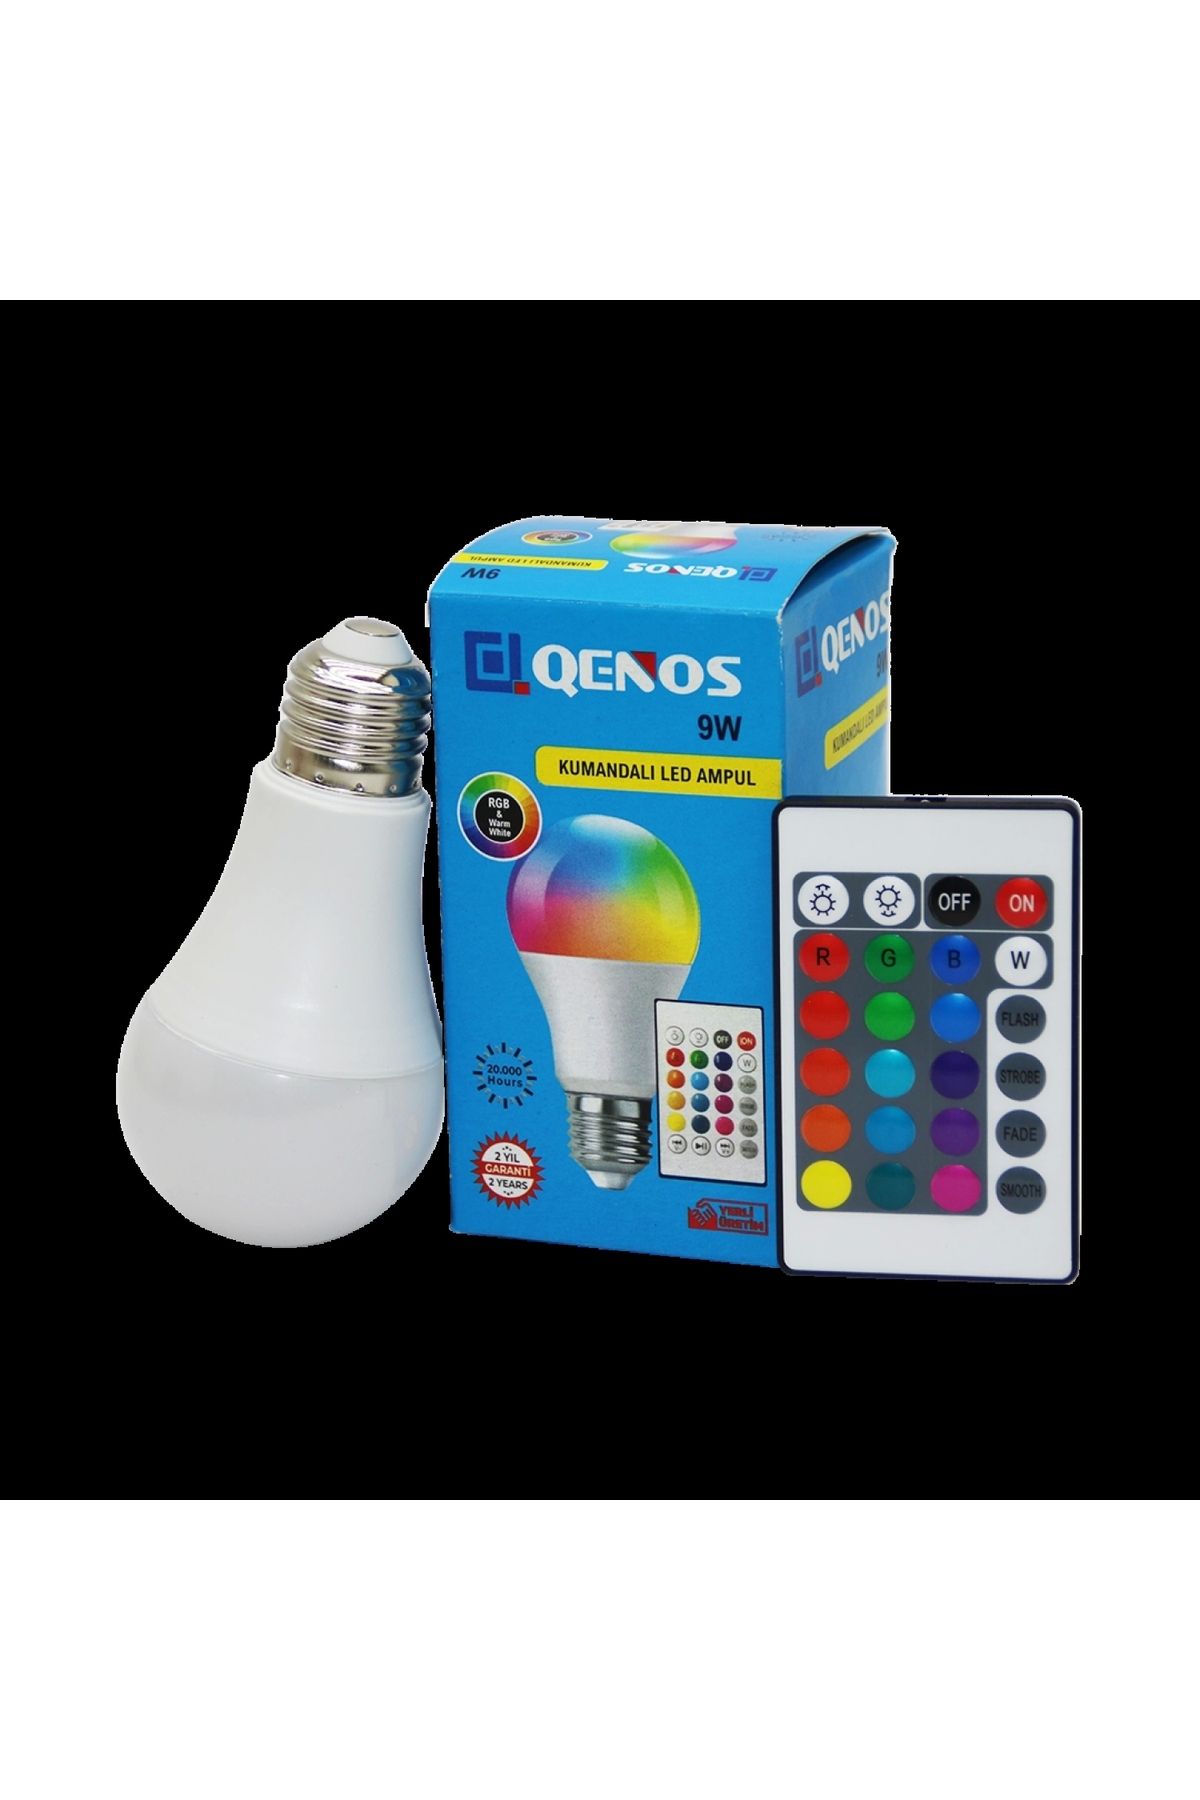 Narnuga 9W - E27 RGB - KUMANDALI LED AMPUL (K95)